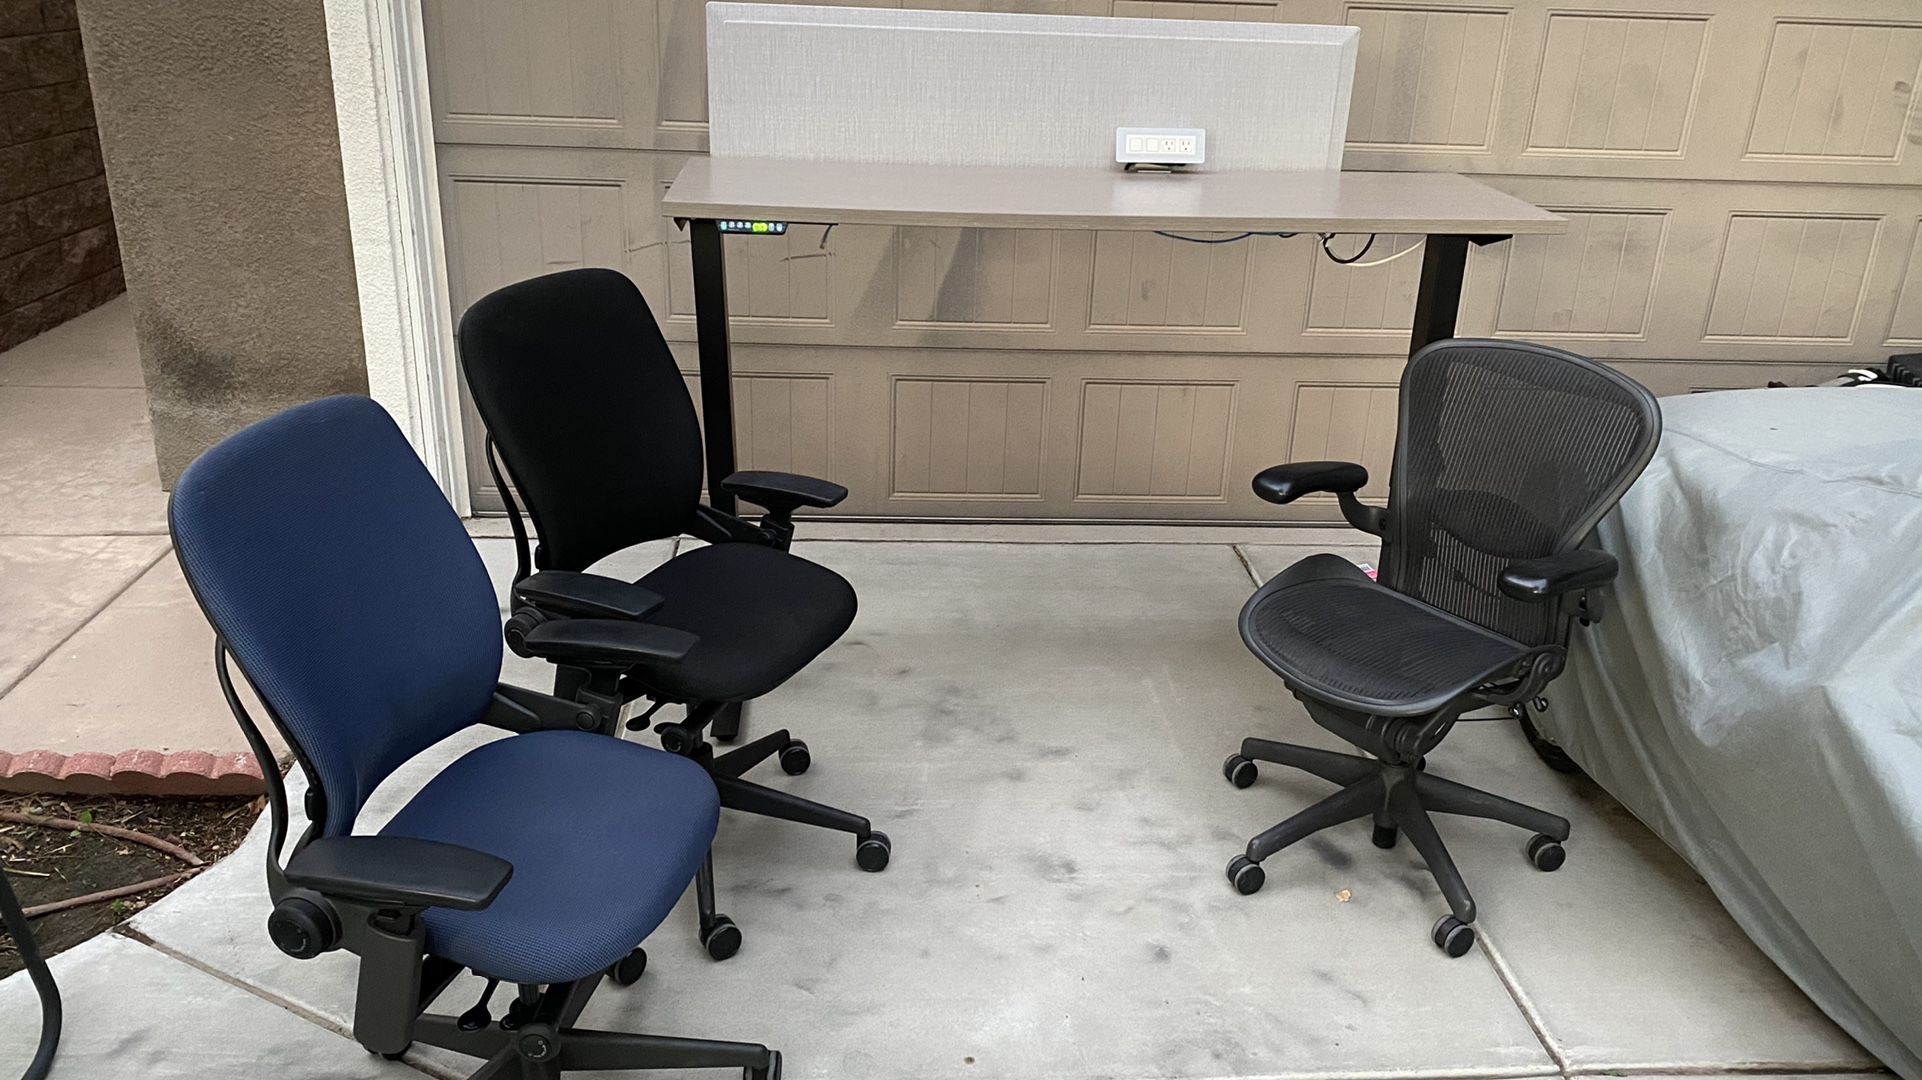 Black Friday DEAL! Herman Miller Adjustable Height Sit Stand Desk + CHOICE of Steelcase Leap V2 Or Herman Miller Aeron Office desk chair! $900